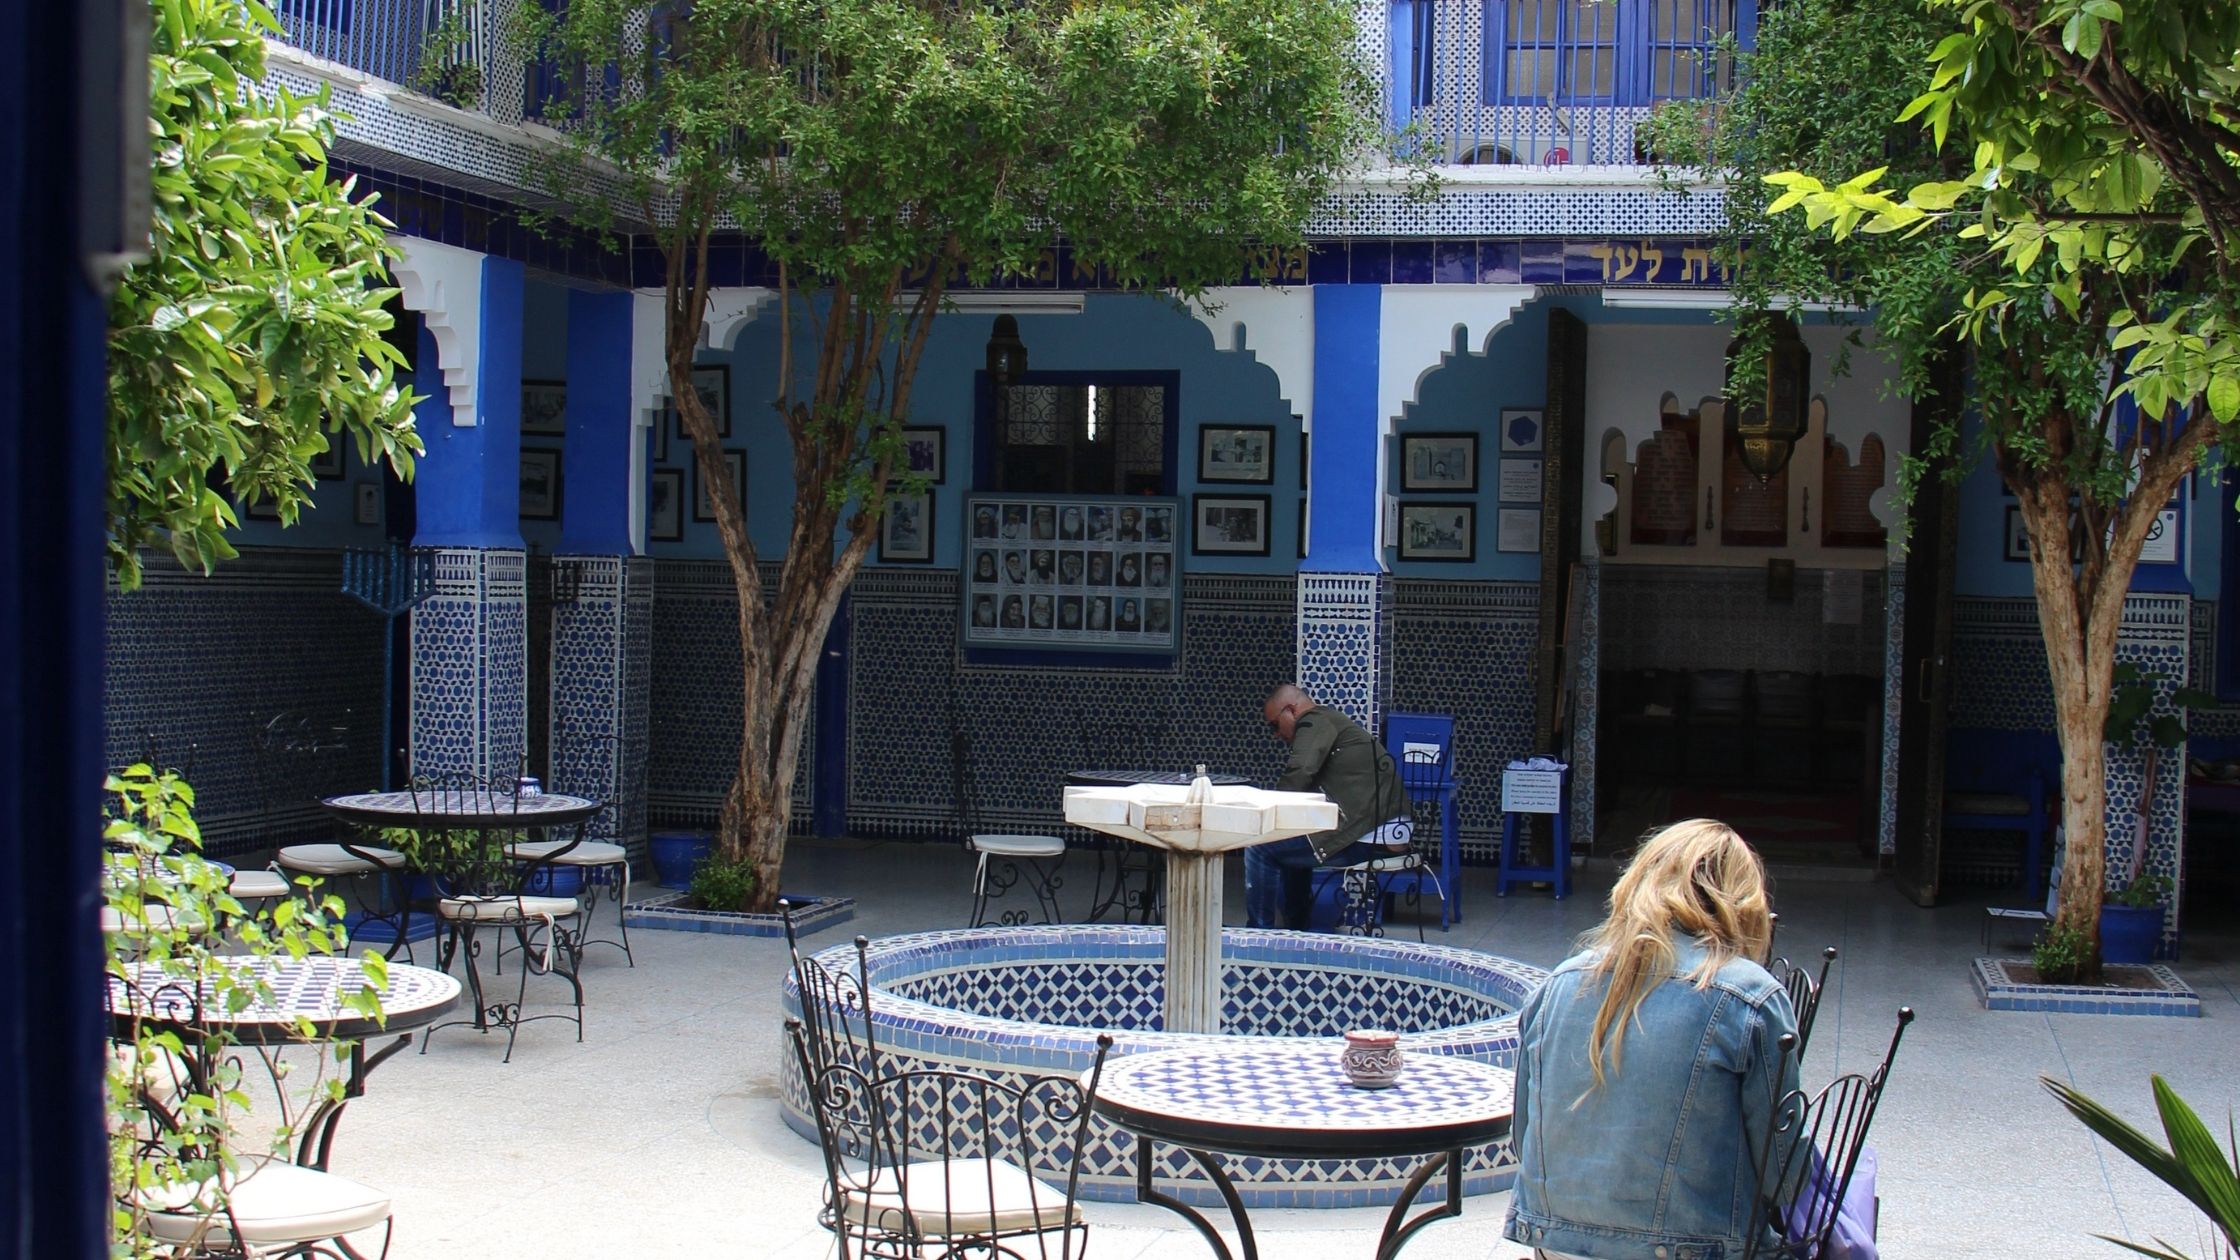 sinagoga-salat-alzama-barrio-judio-marrakech